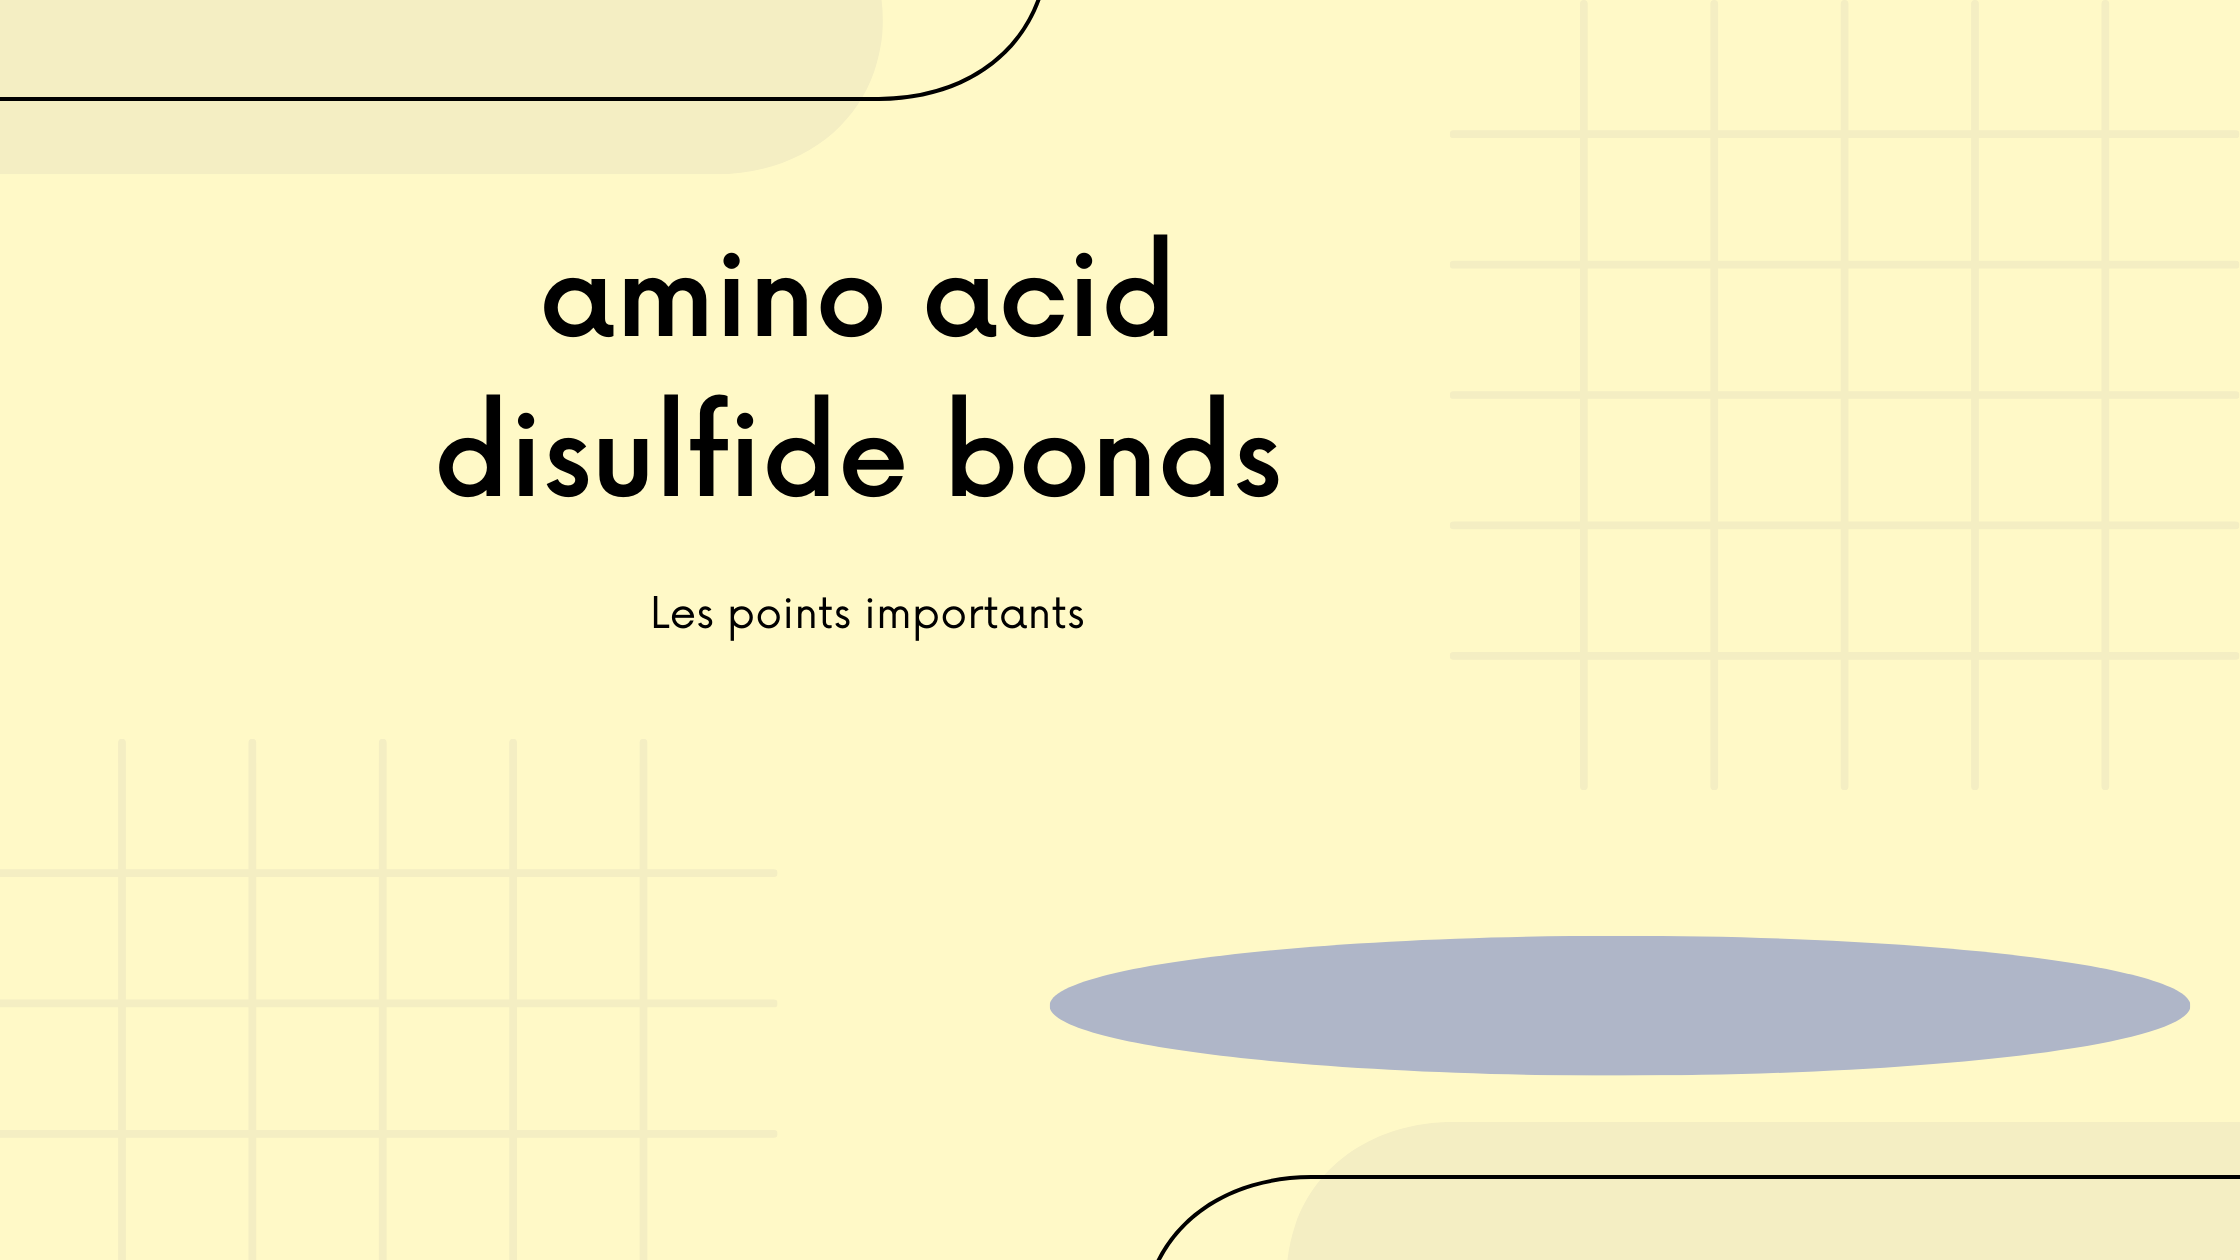 amino acid disulfide bonds | Les points importants